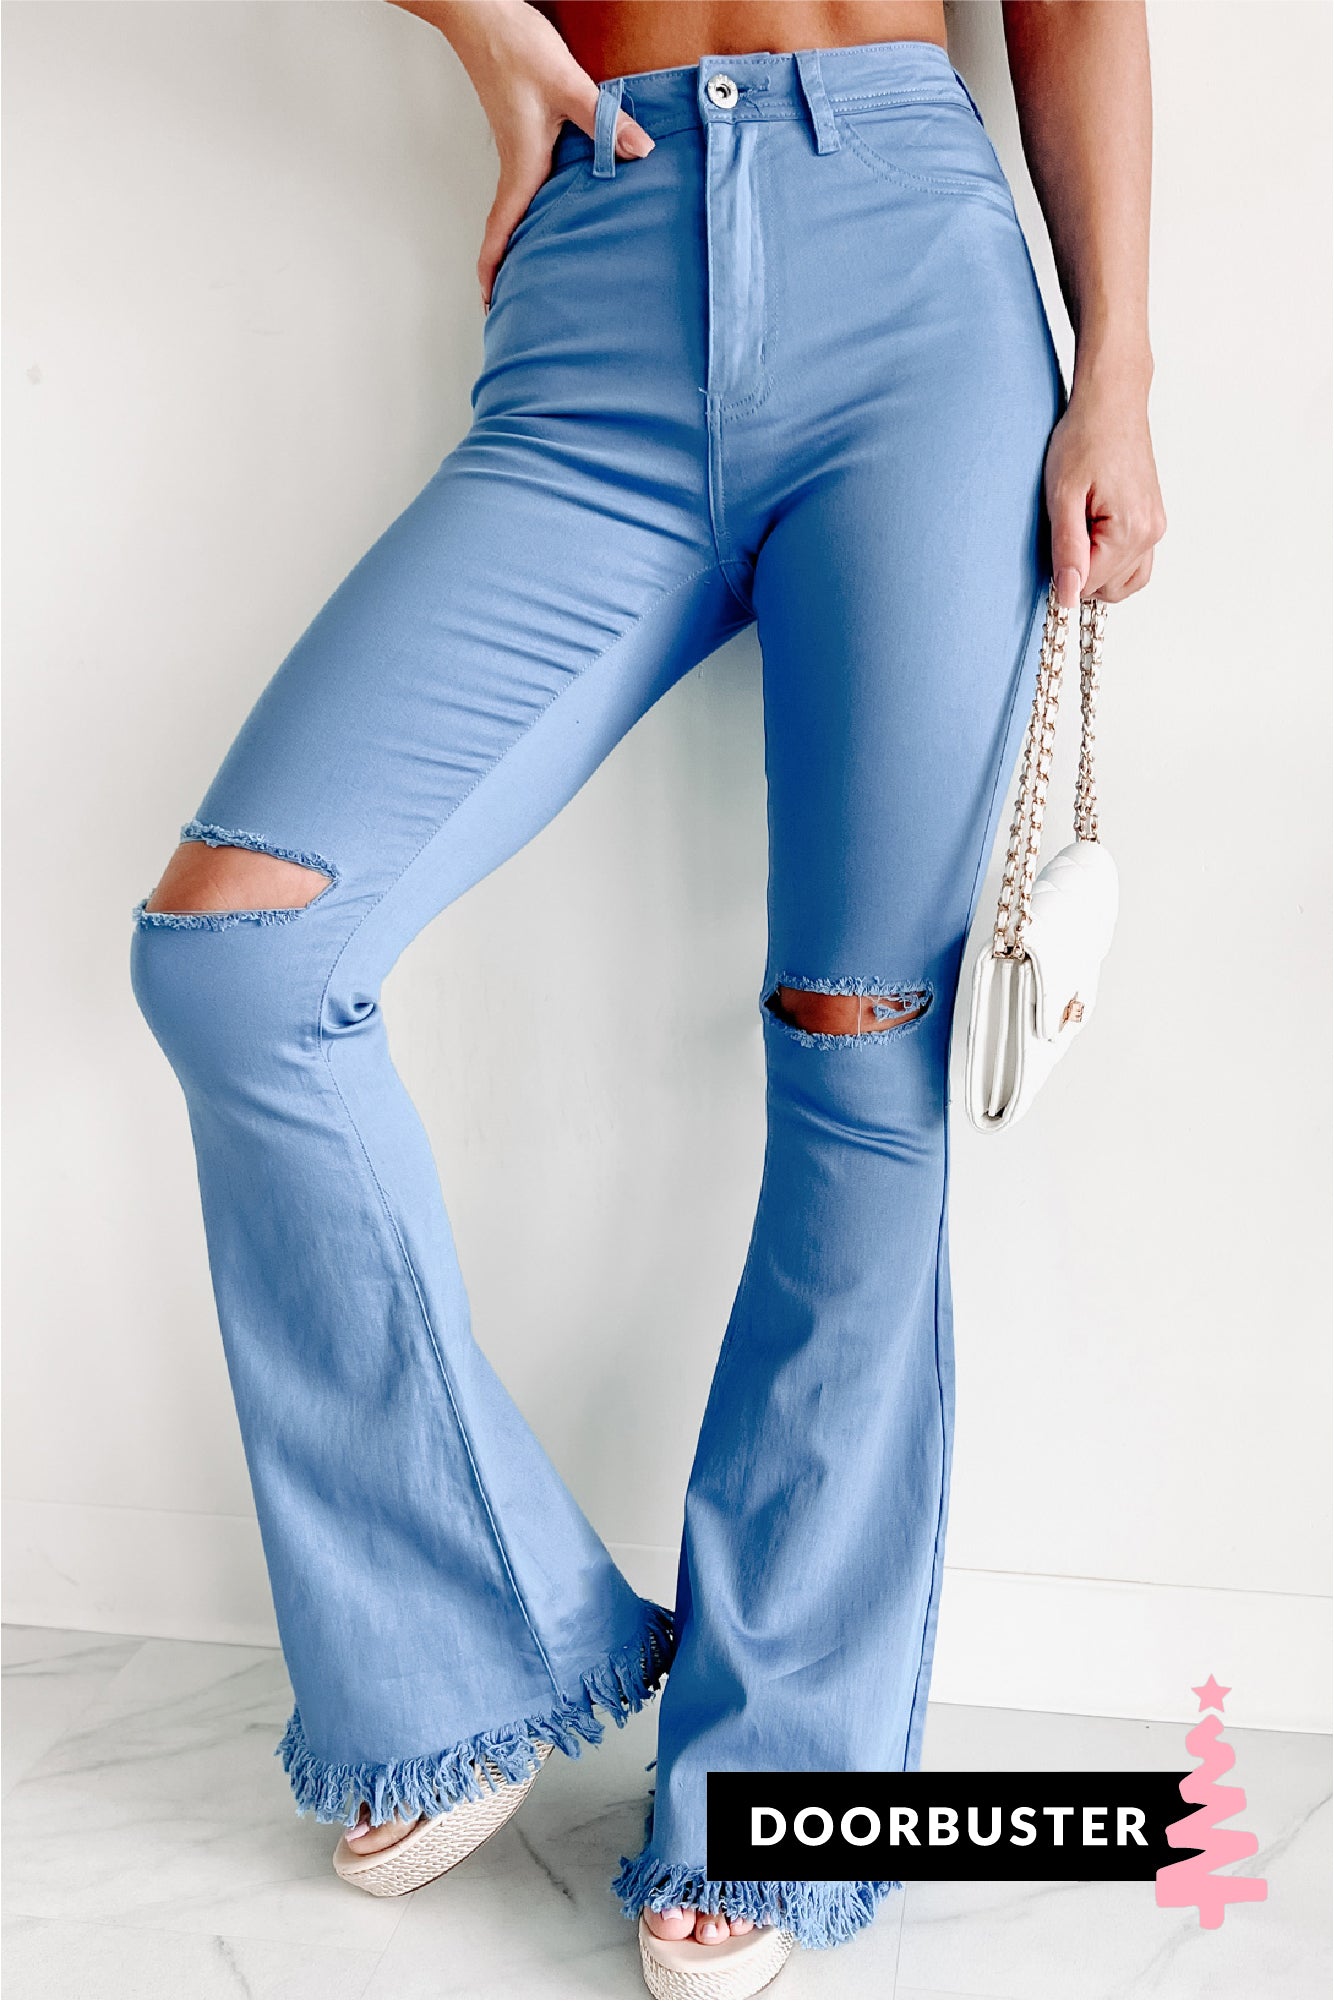 Navy Blue And White Lowwaist Straight Leg- Banditz Sweatpants – BANDITZ-shop